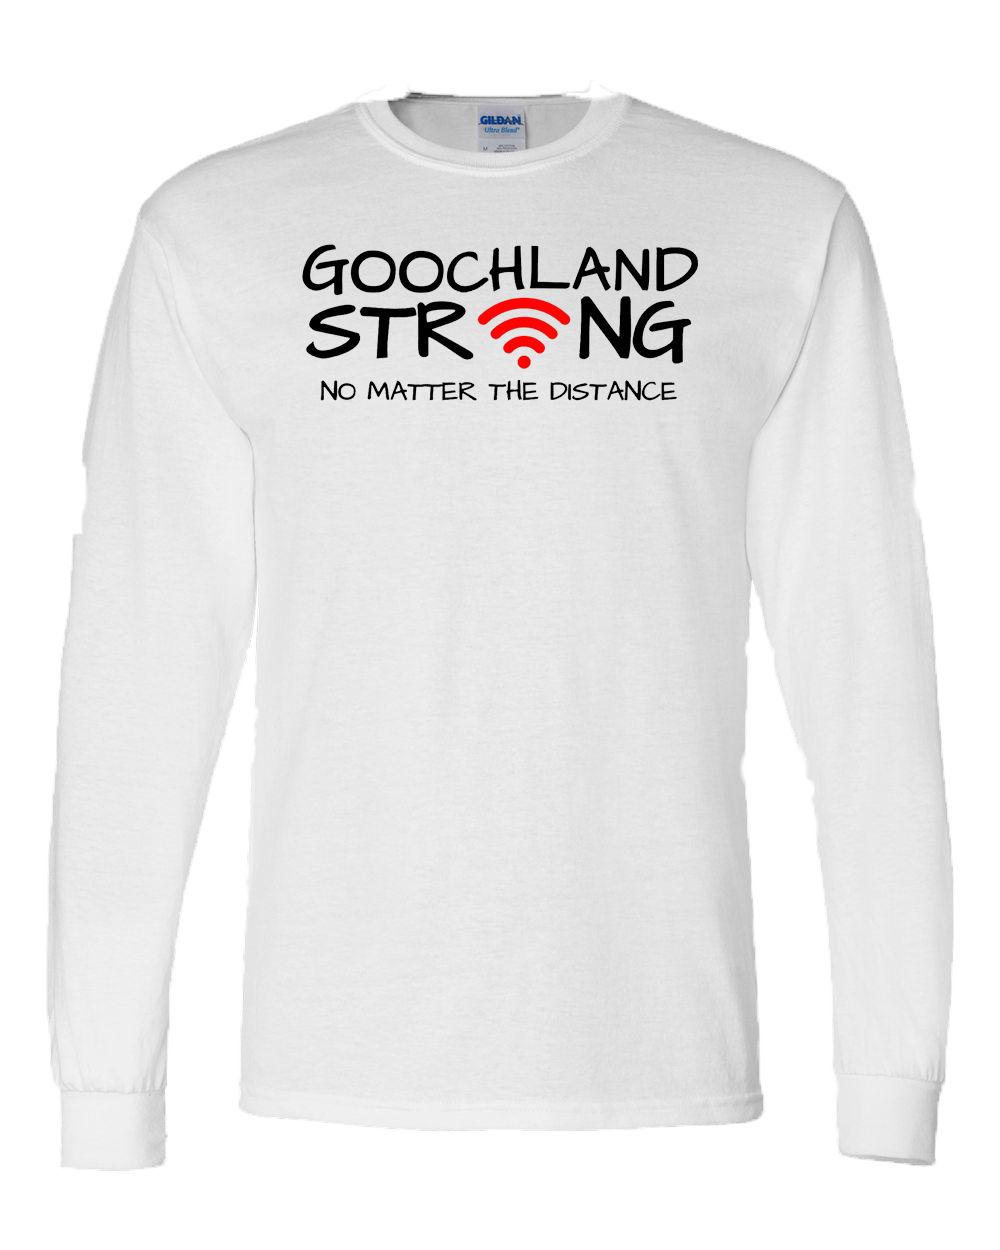 Goochland Strong LongSleeve T - Goochland Elementary